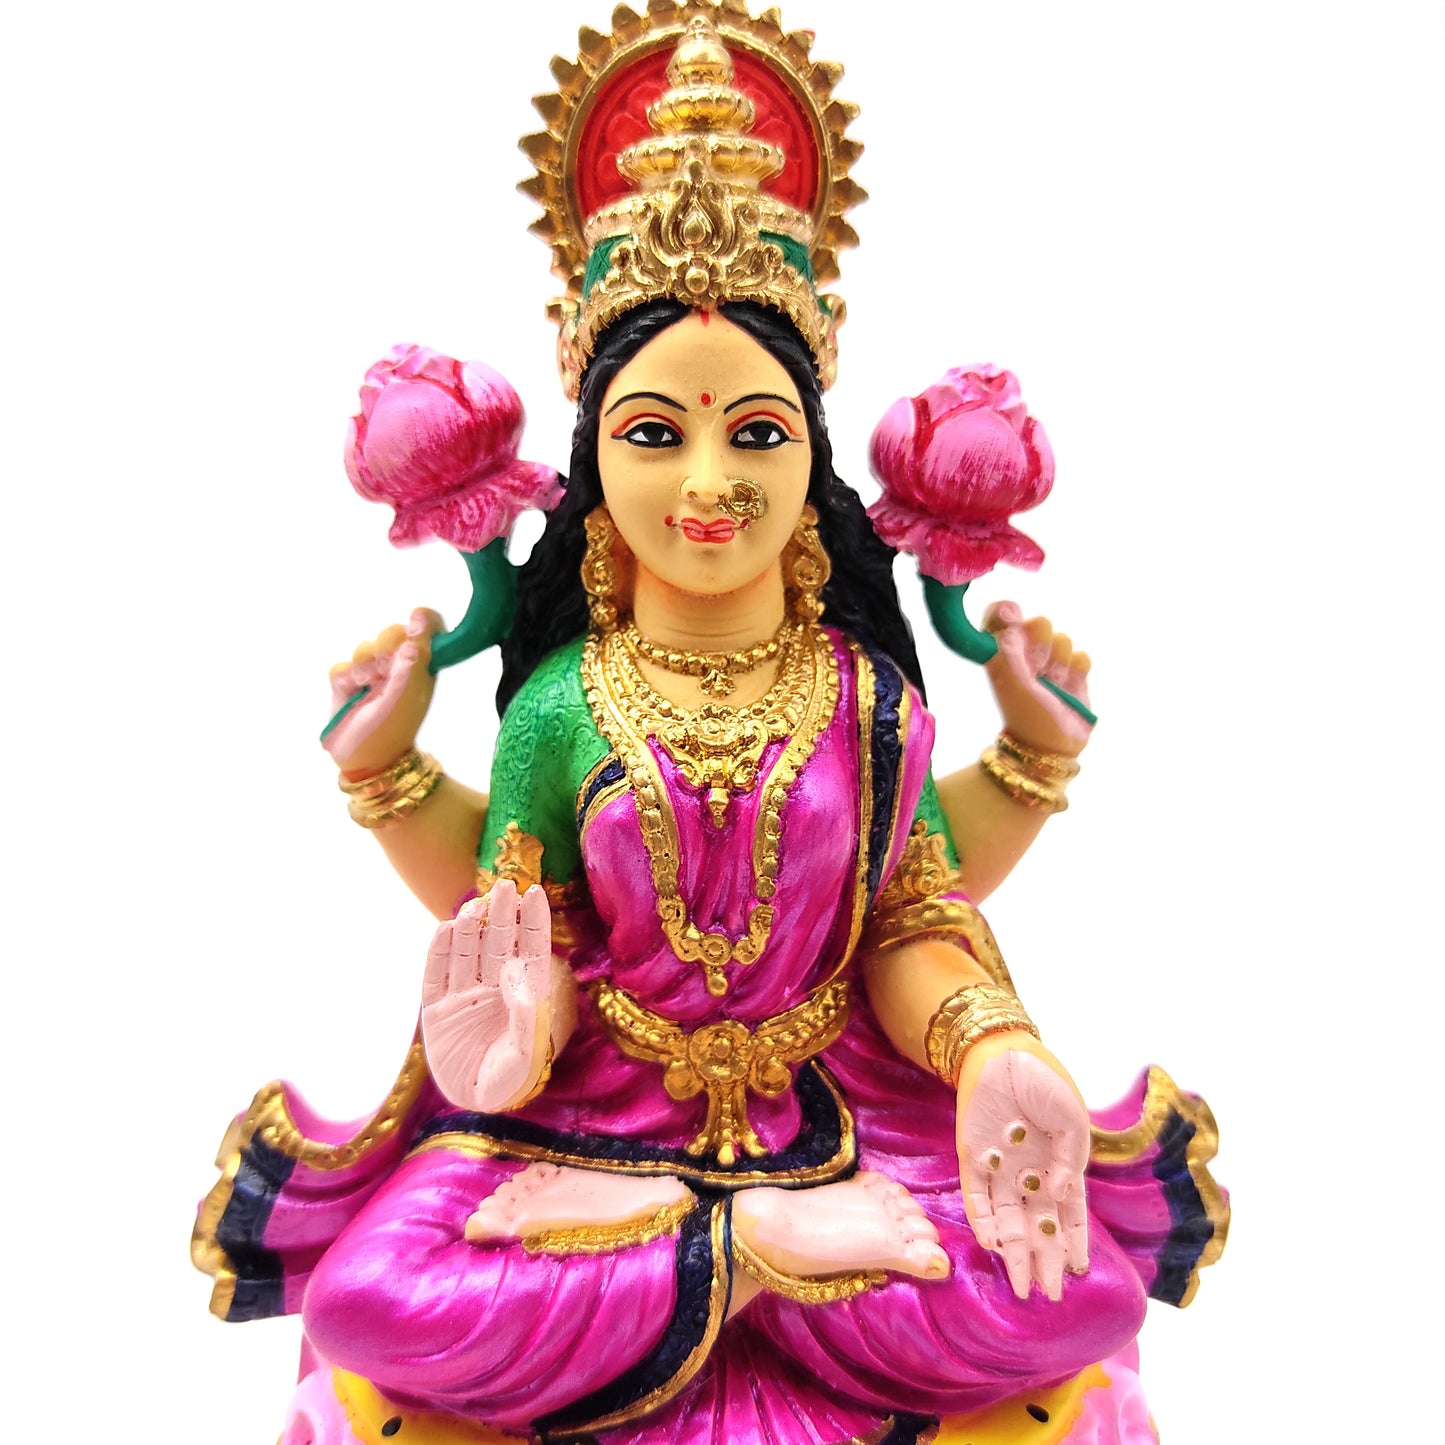 Gorgeous Lakshmi Ma Laxmi India Goddess in Lotus Handmade Statue 6.5"